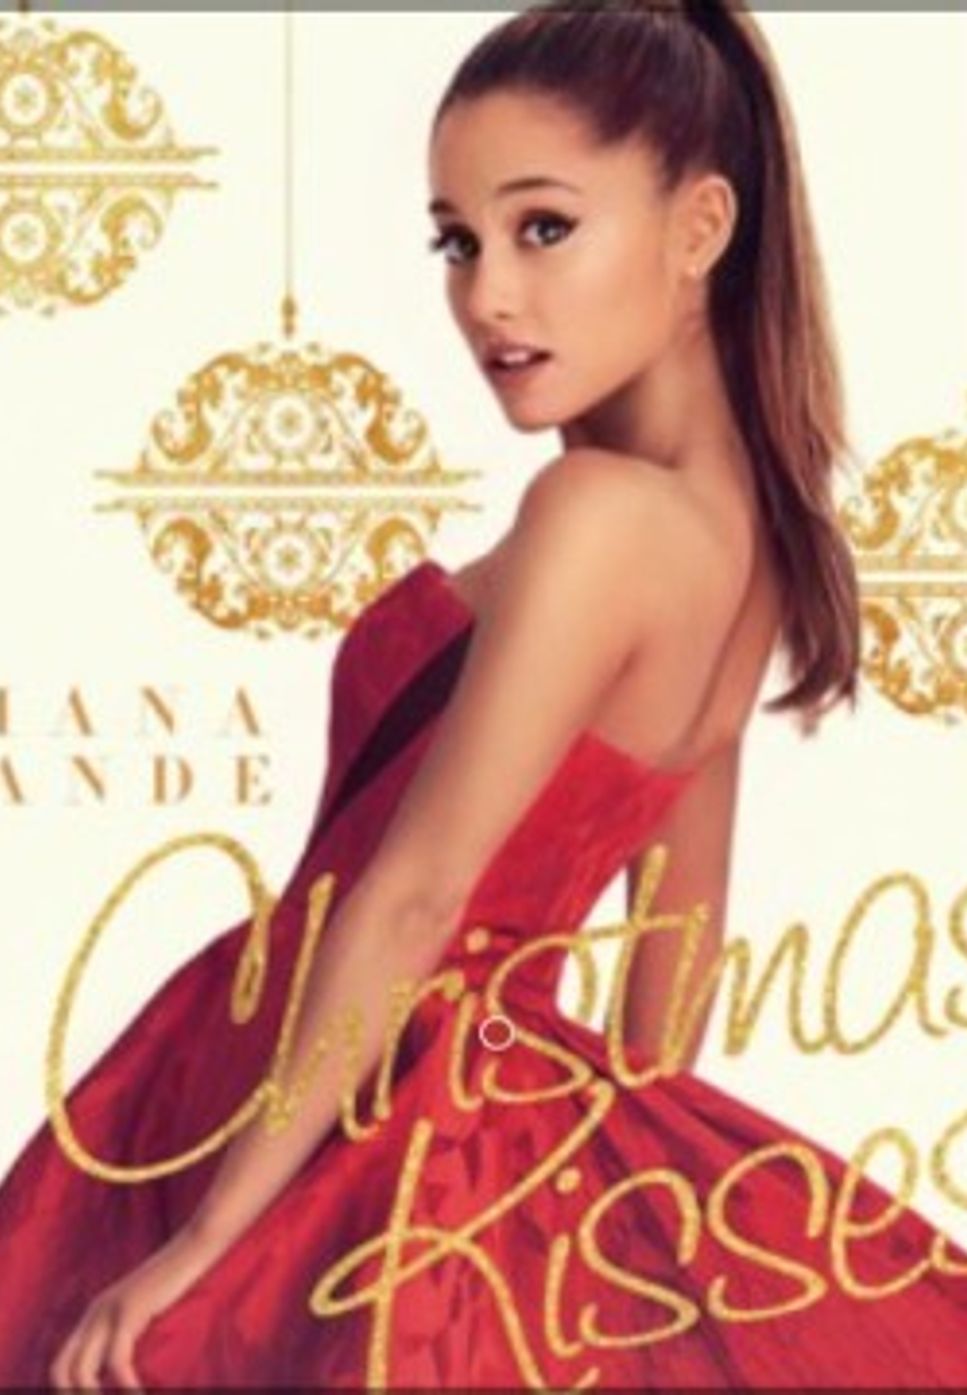 Ariana Grande - Santa Tell Me by jiniway